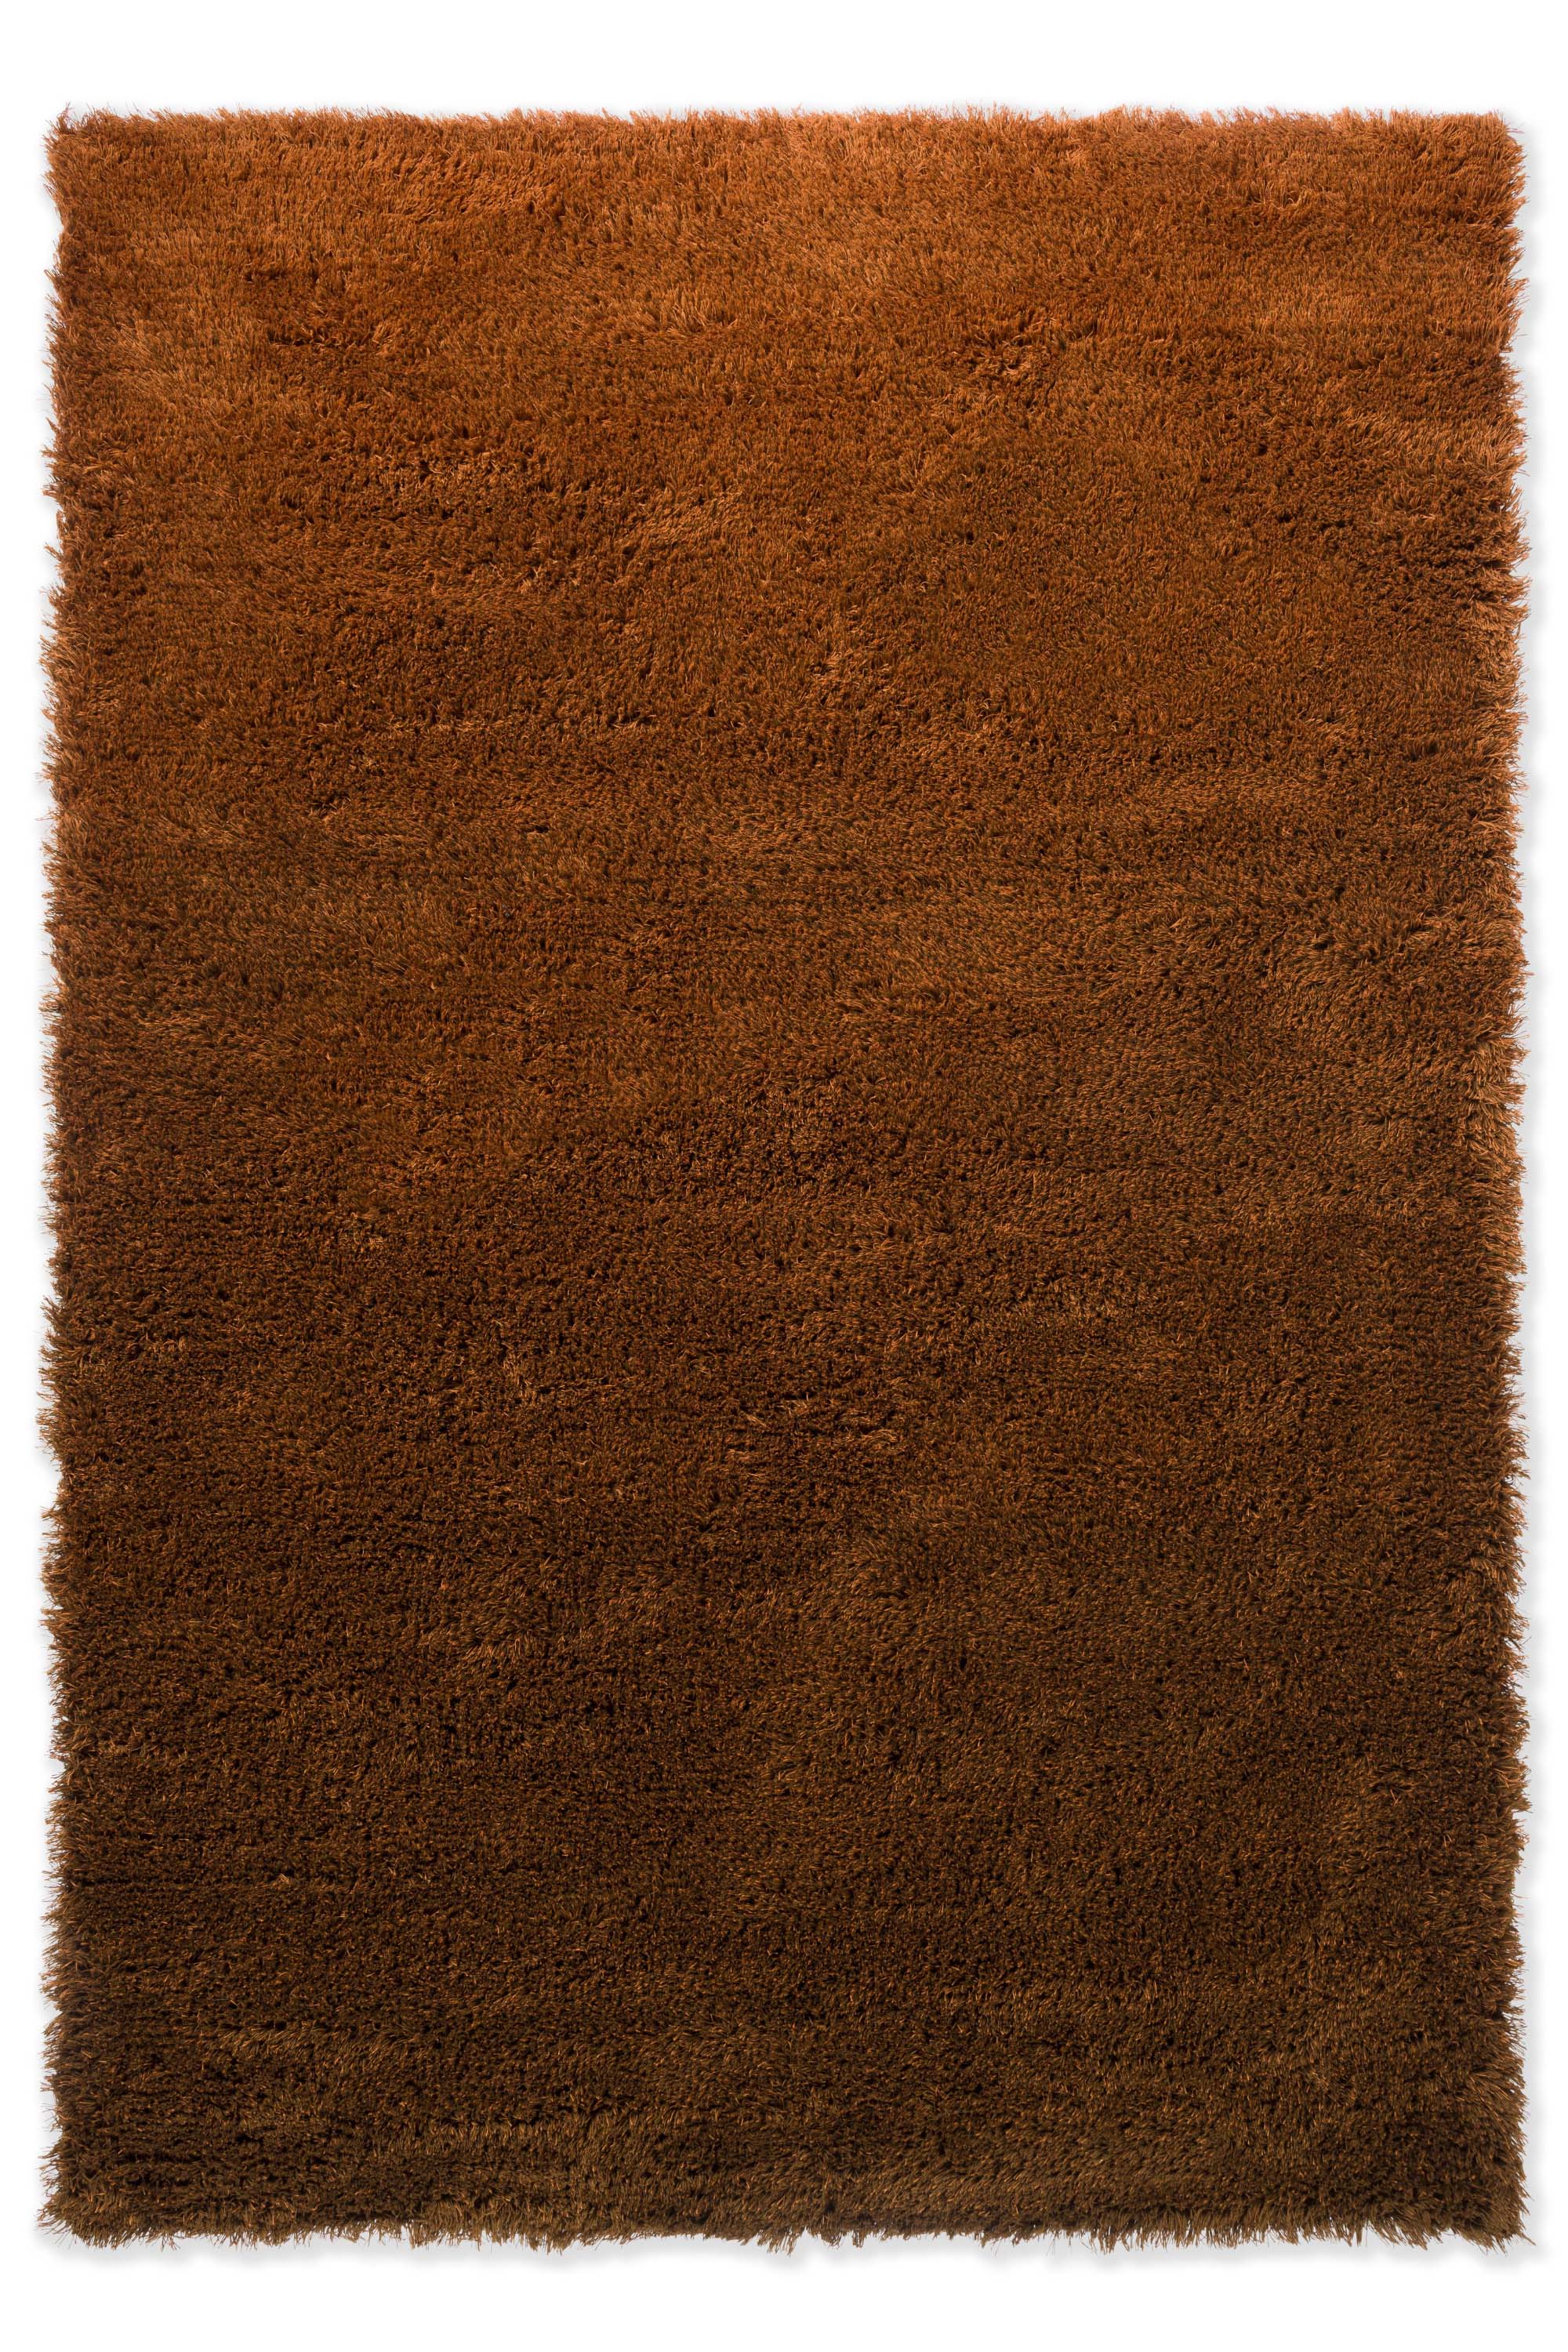 Plain orange rug with shaggy pile